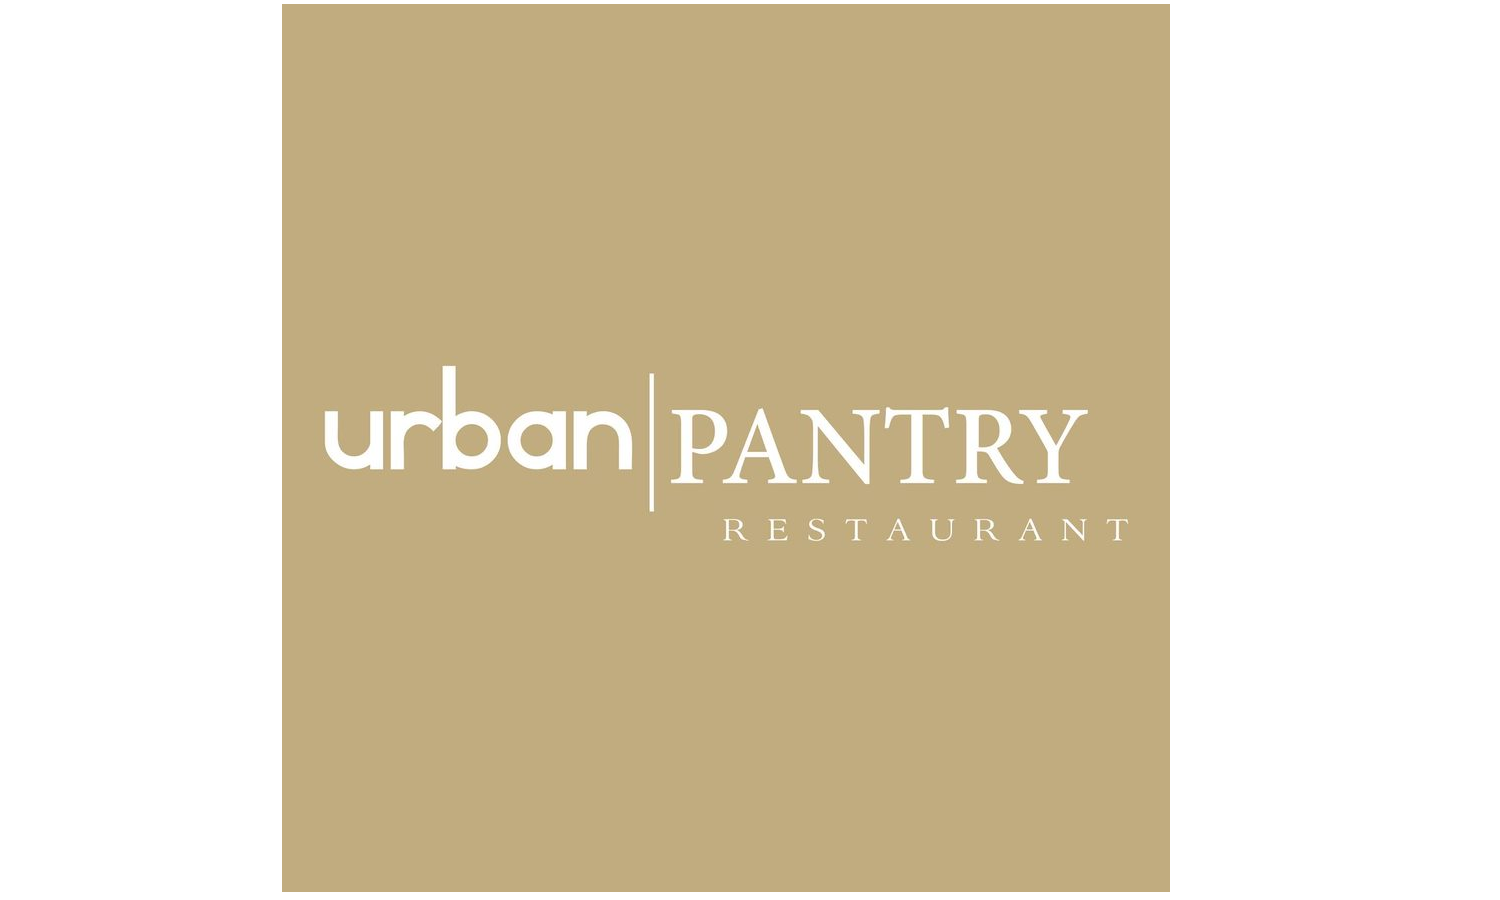 Urban Pantry Restaurant